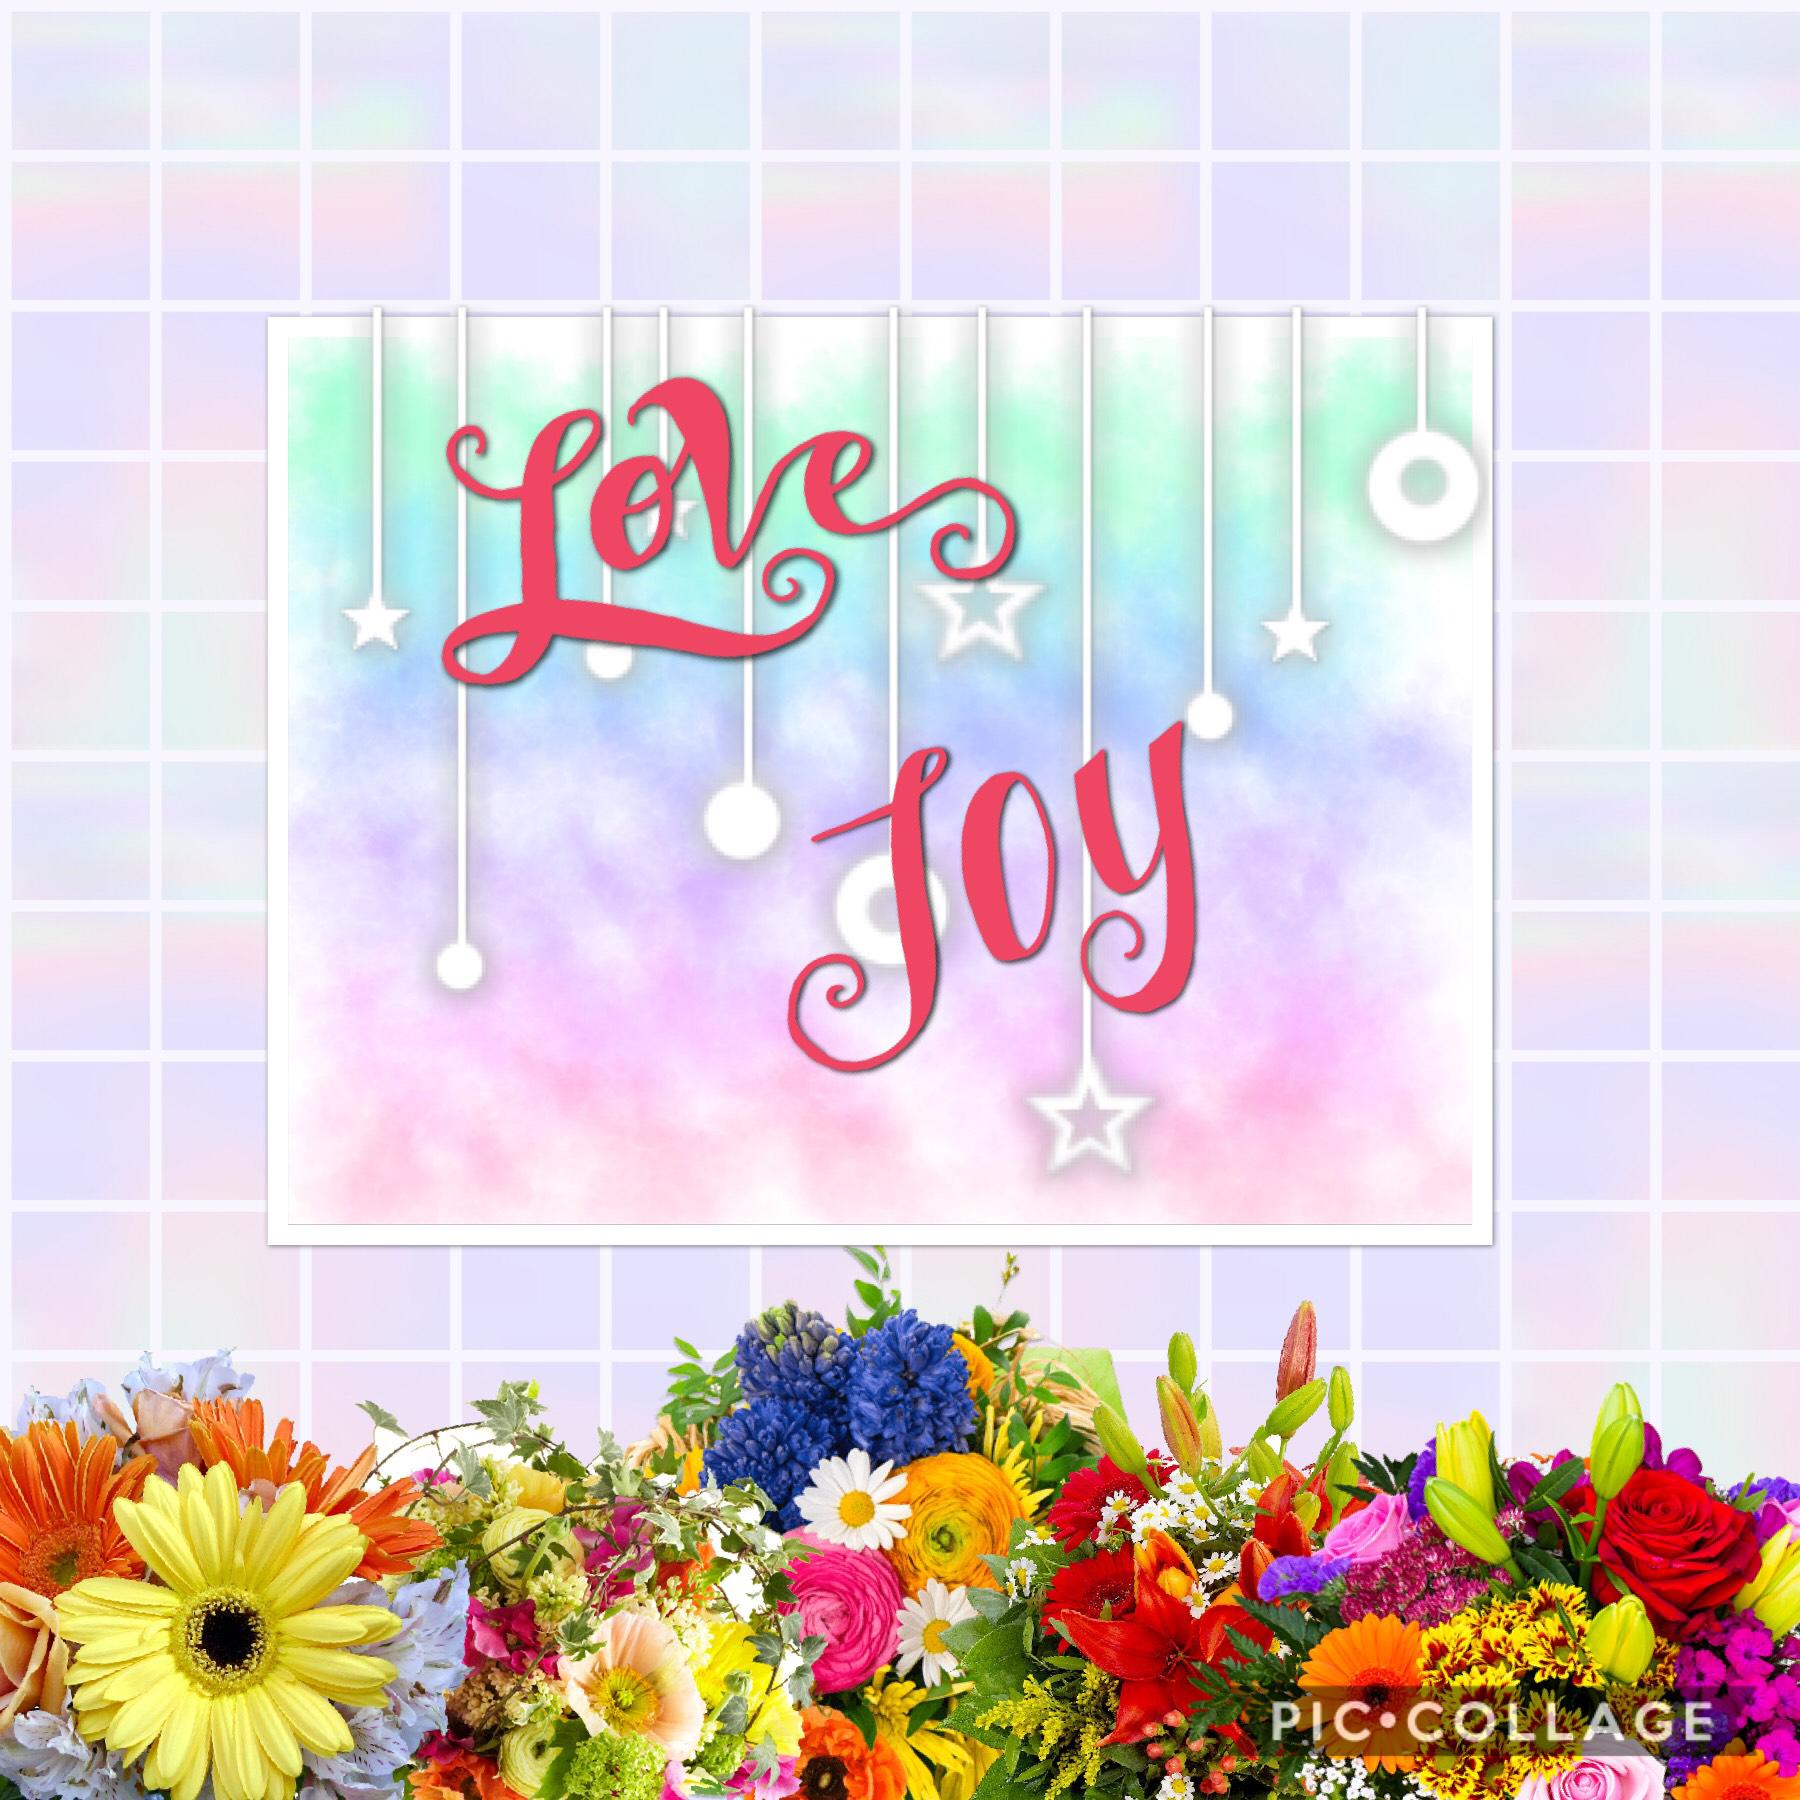 Love joy 